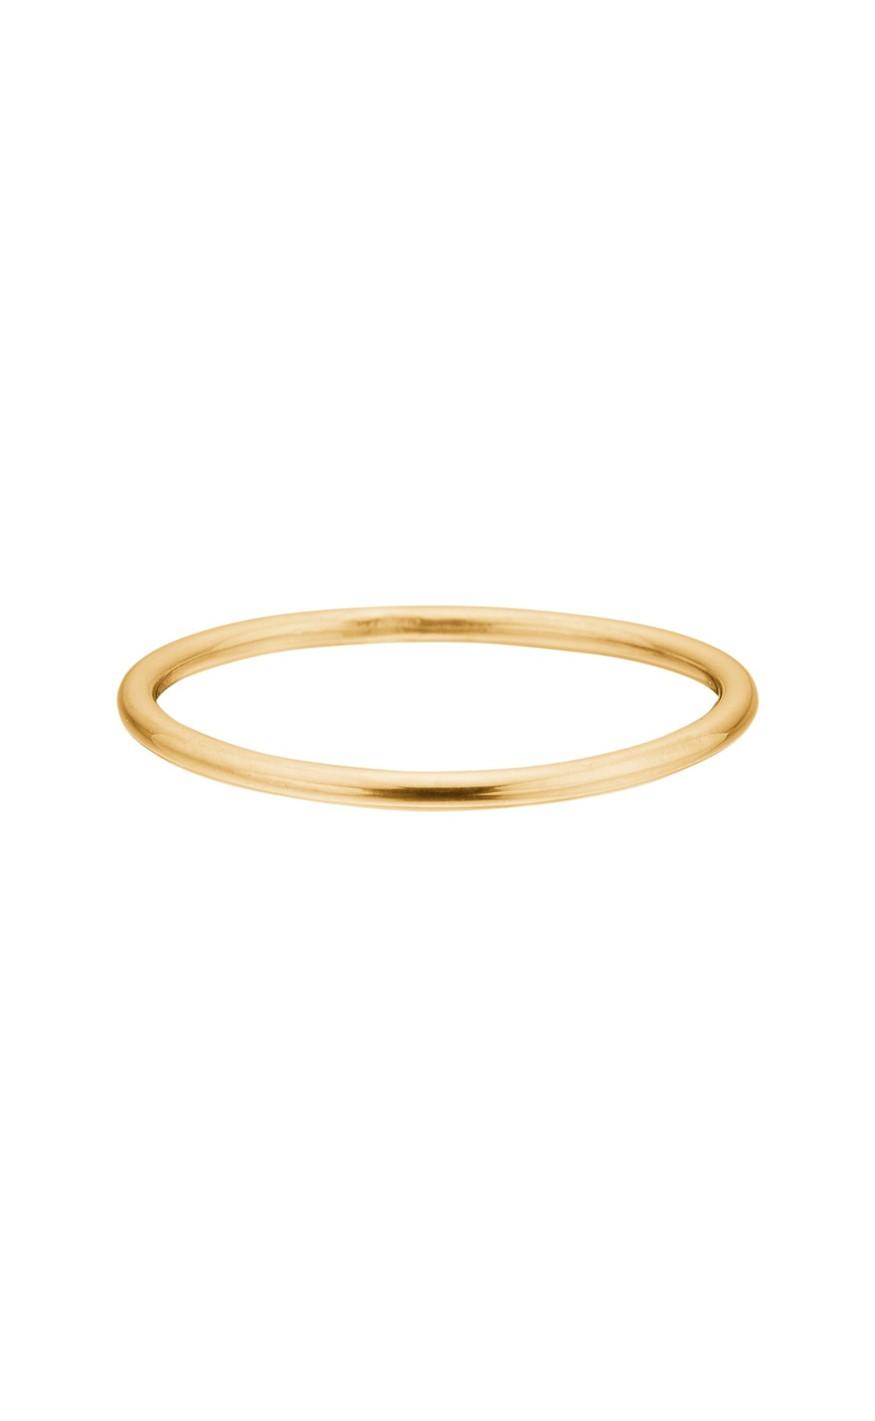 Se ENAMEL Copenhagen Ring - Simple - Gold Colour hos Fashionbystrand